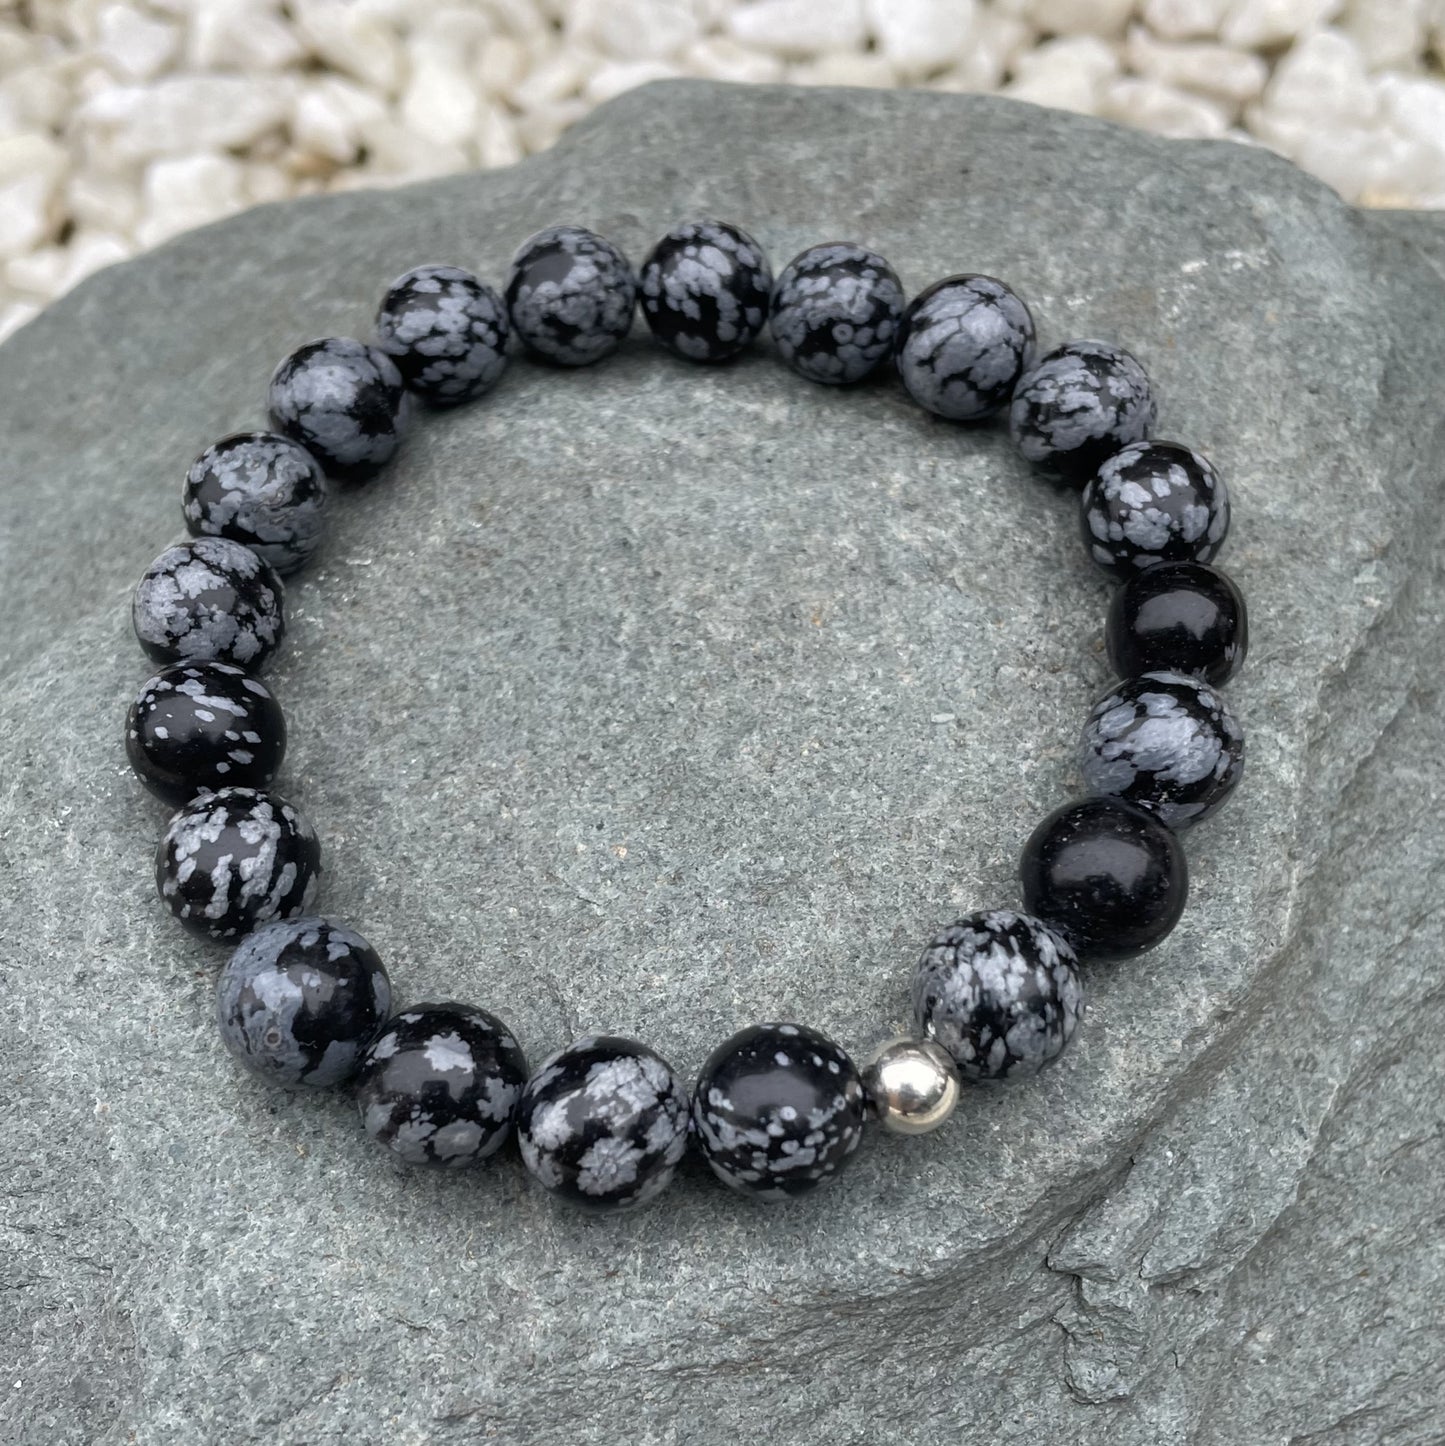 Snowflake obsidian crystal bracelet